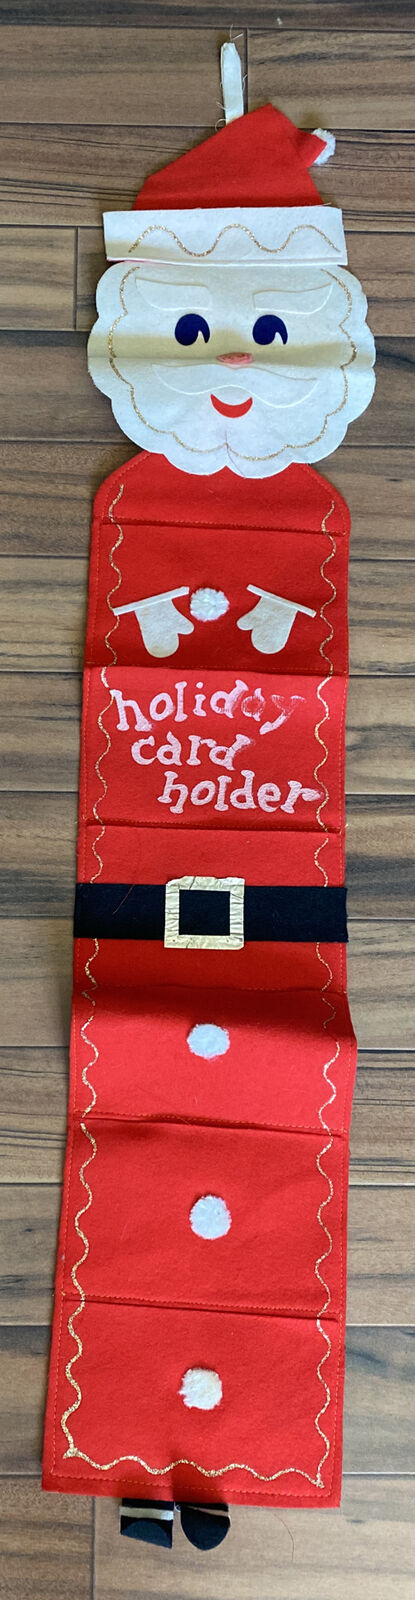 Vtge MCM Christmas Holiday Card Holder Santa Claus Felt Glitter Wall Decor Japan